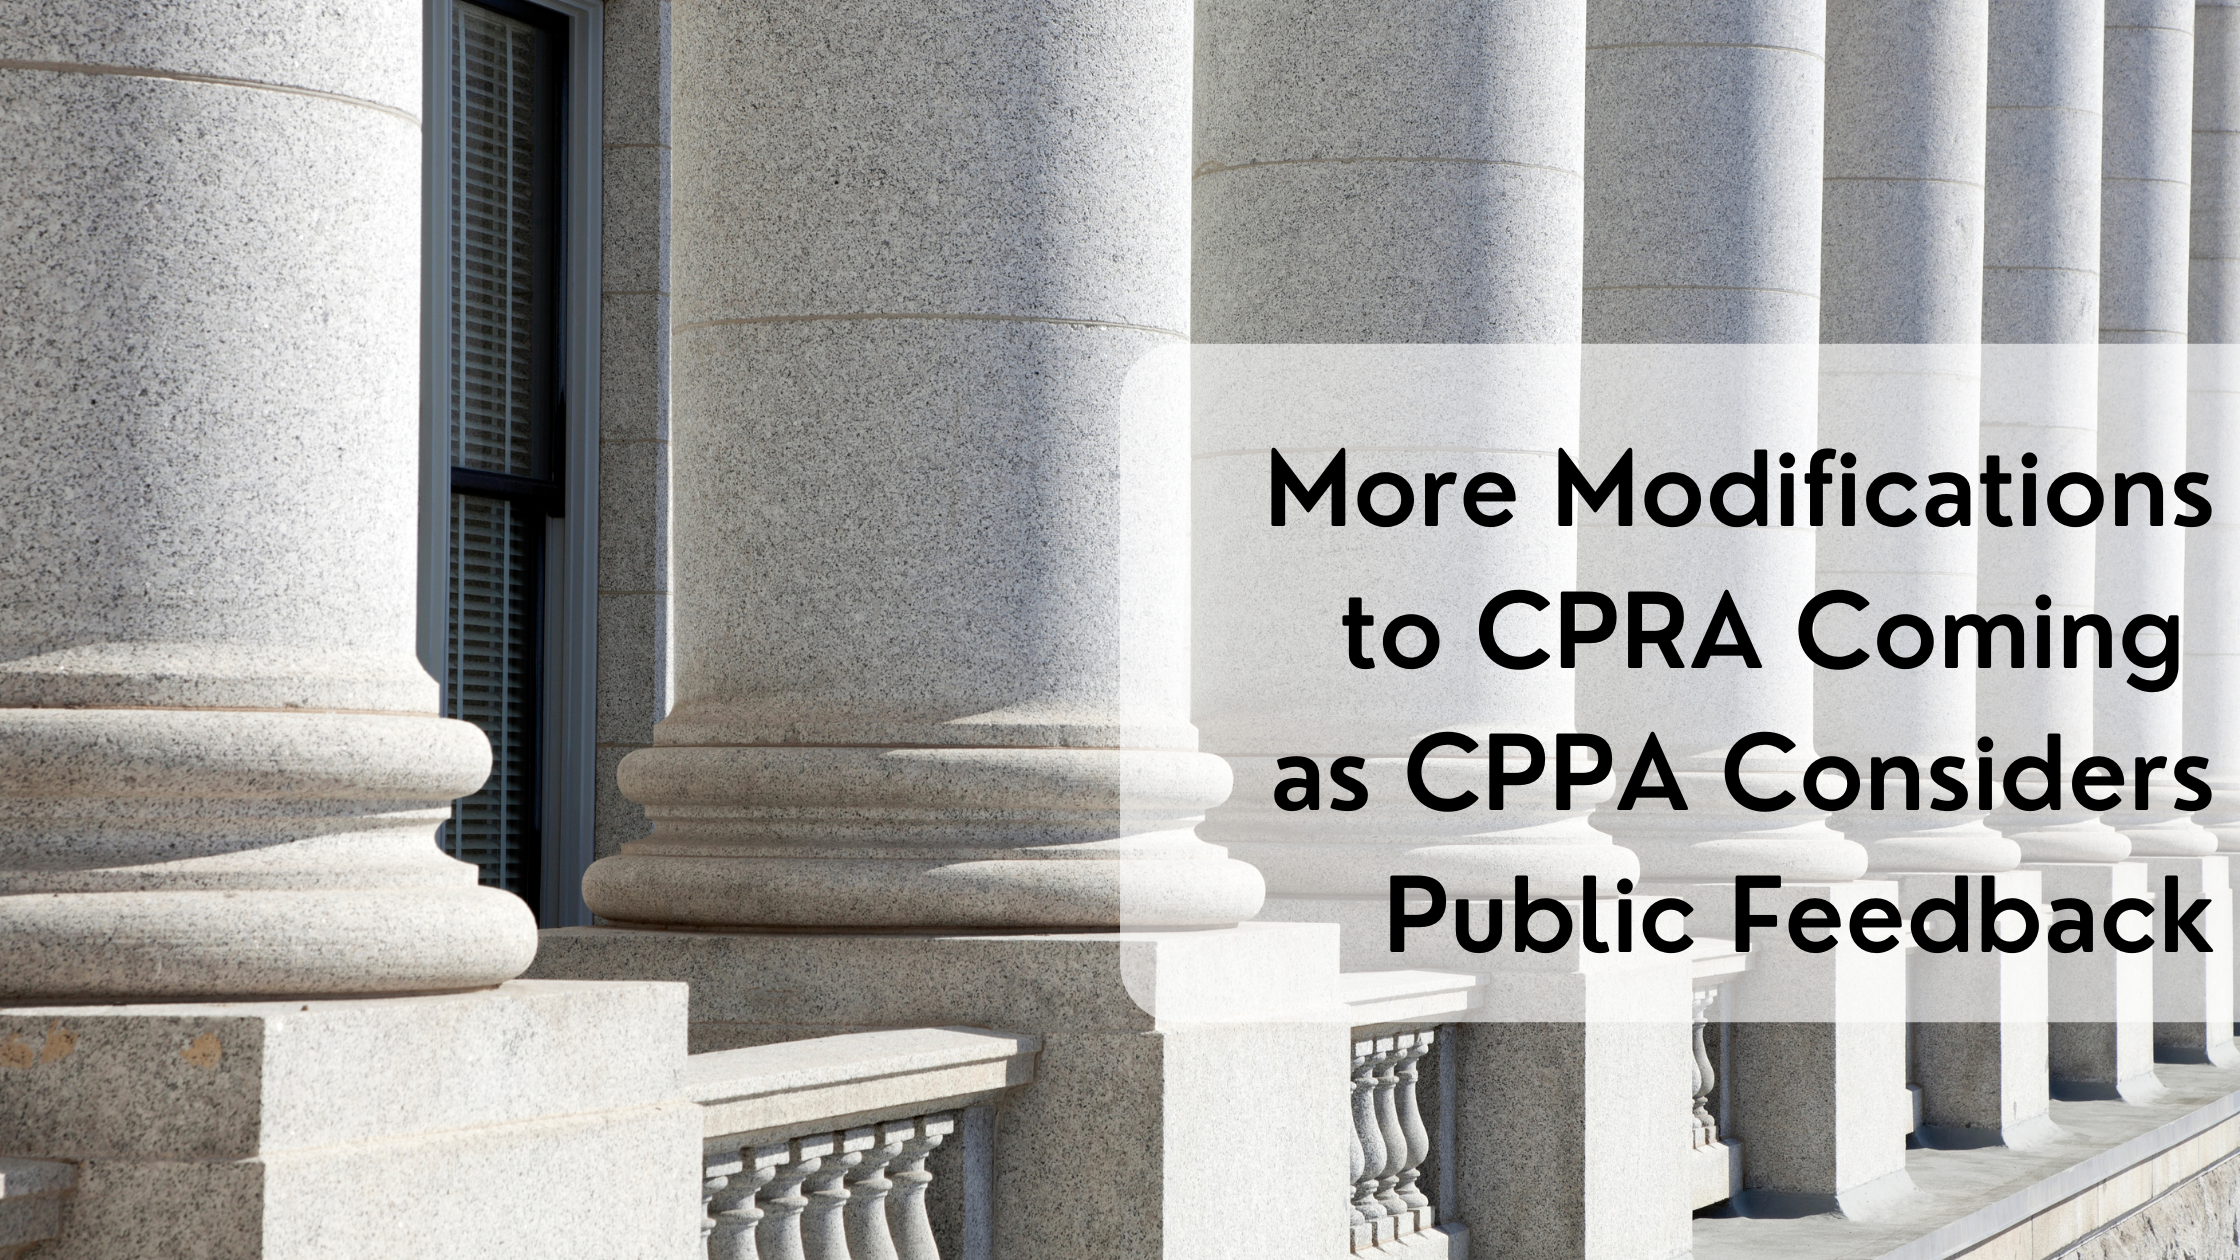 cppa to modify cpra further